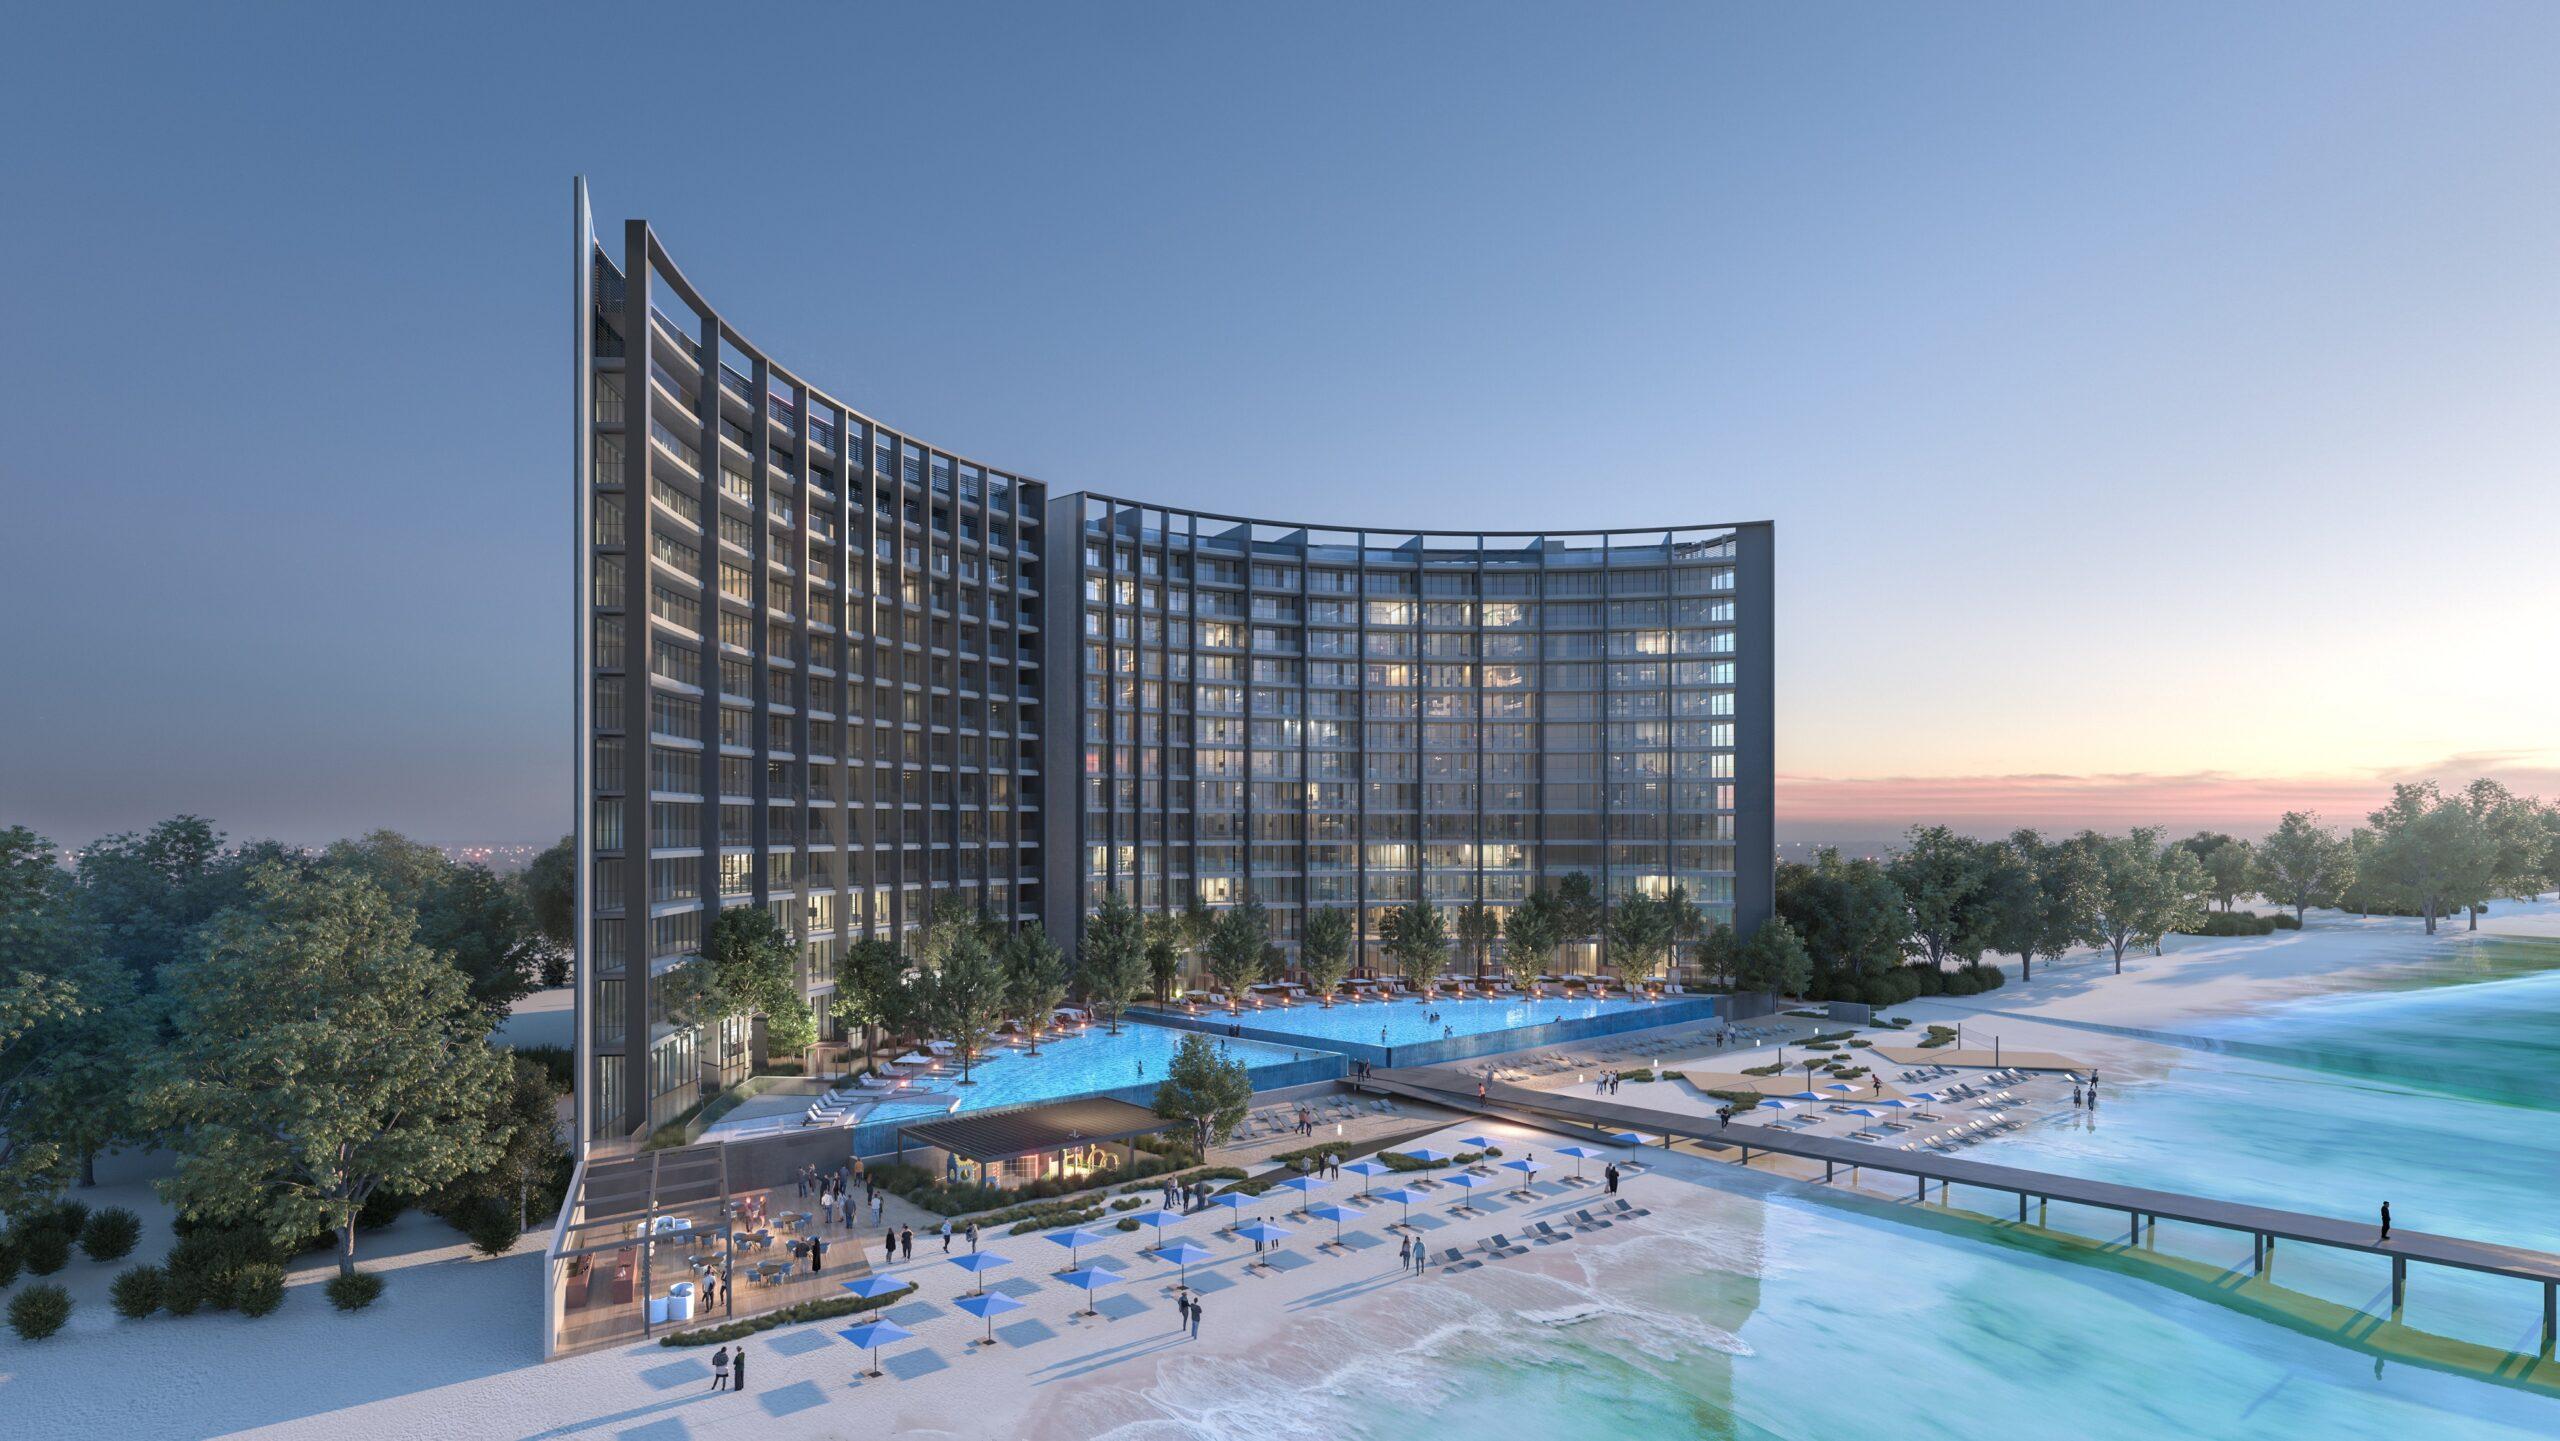 Anantara Sharjah Resort will be entering the Emirate 